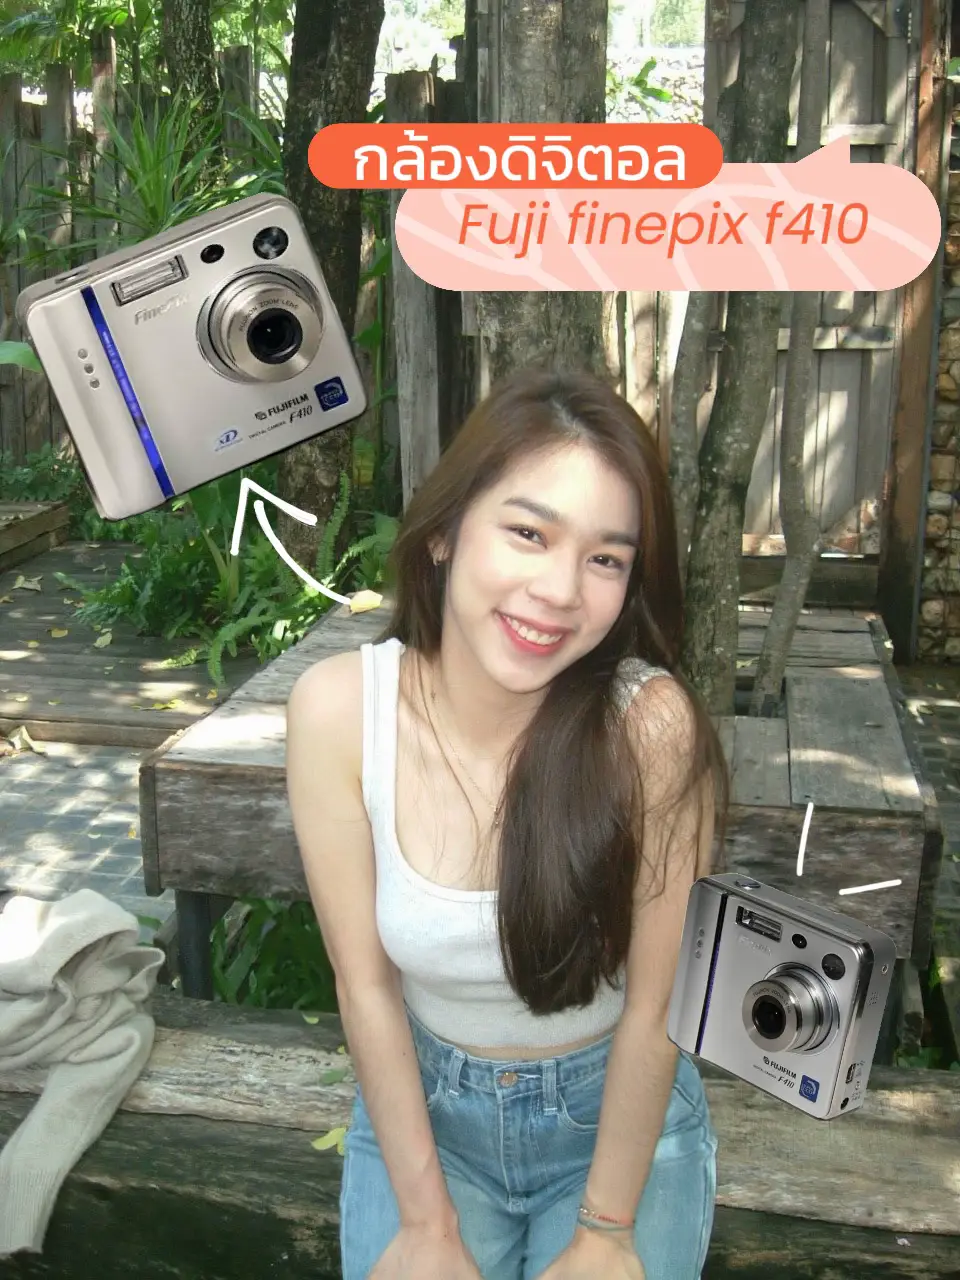 Fuji finepix f410 digital camera 📸✨ | Gallery posted by OII | Lemon8